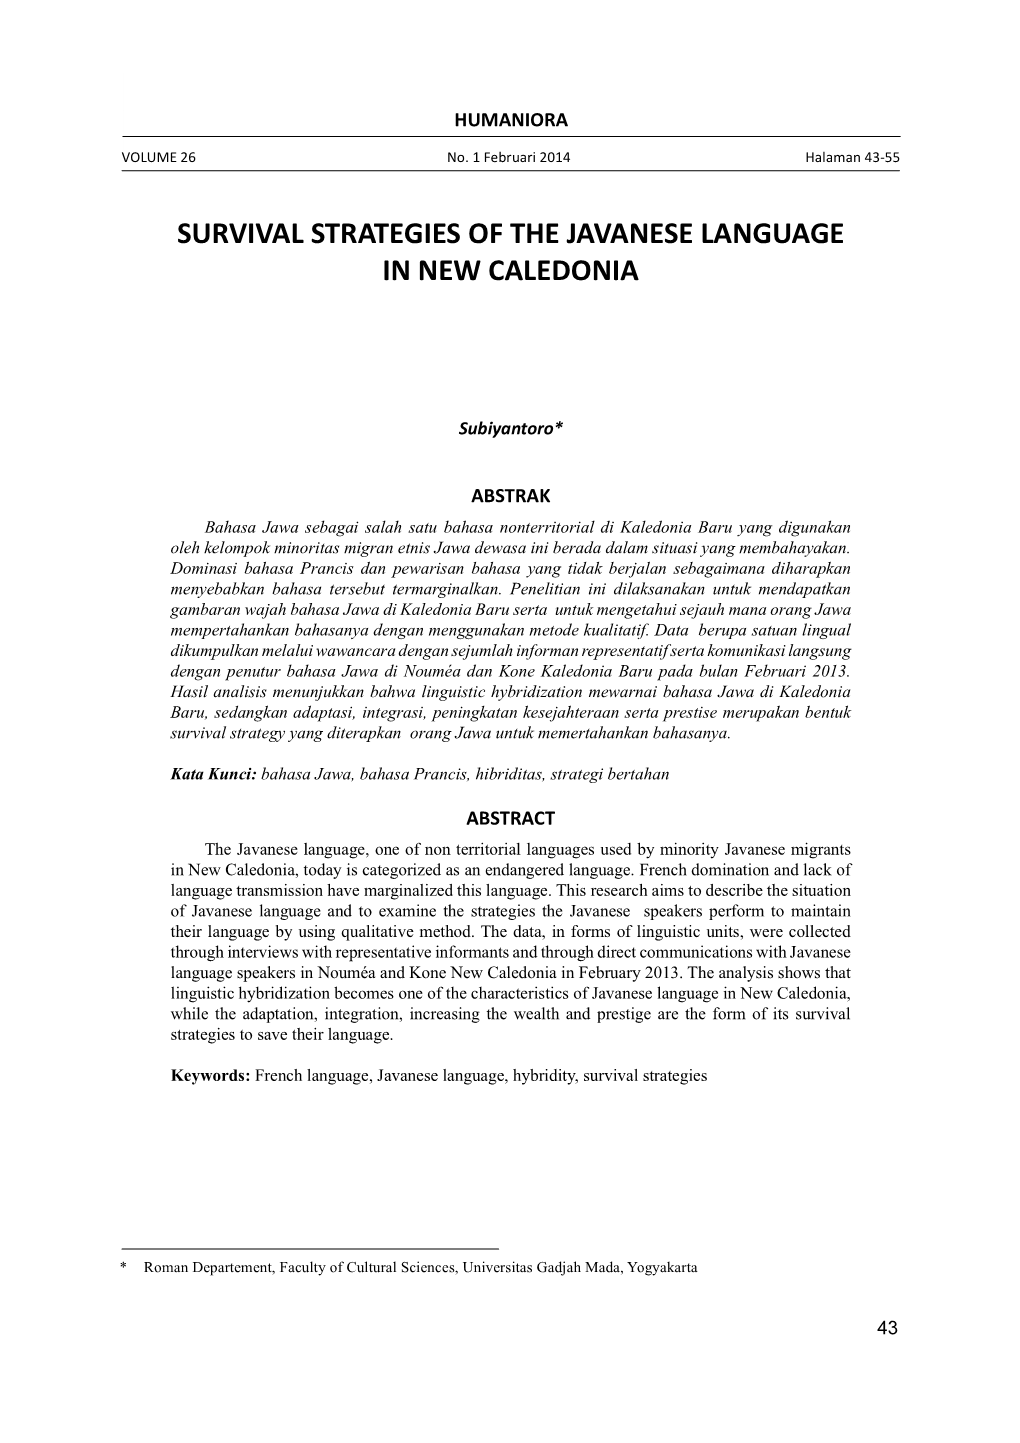 Survival Strategies of the Javanese Language in New Caledonia